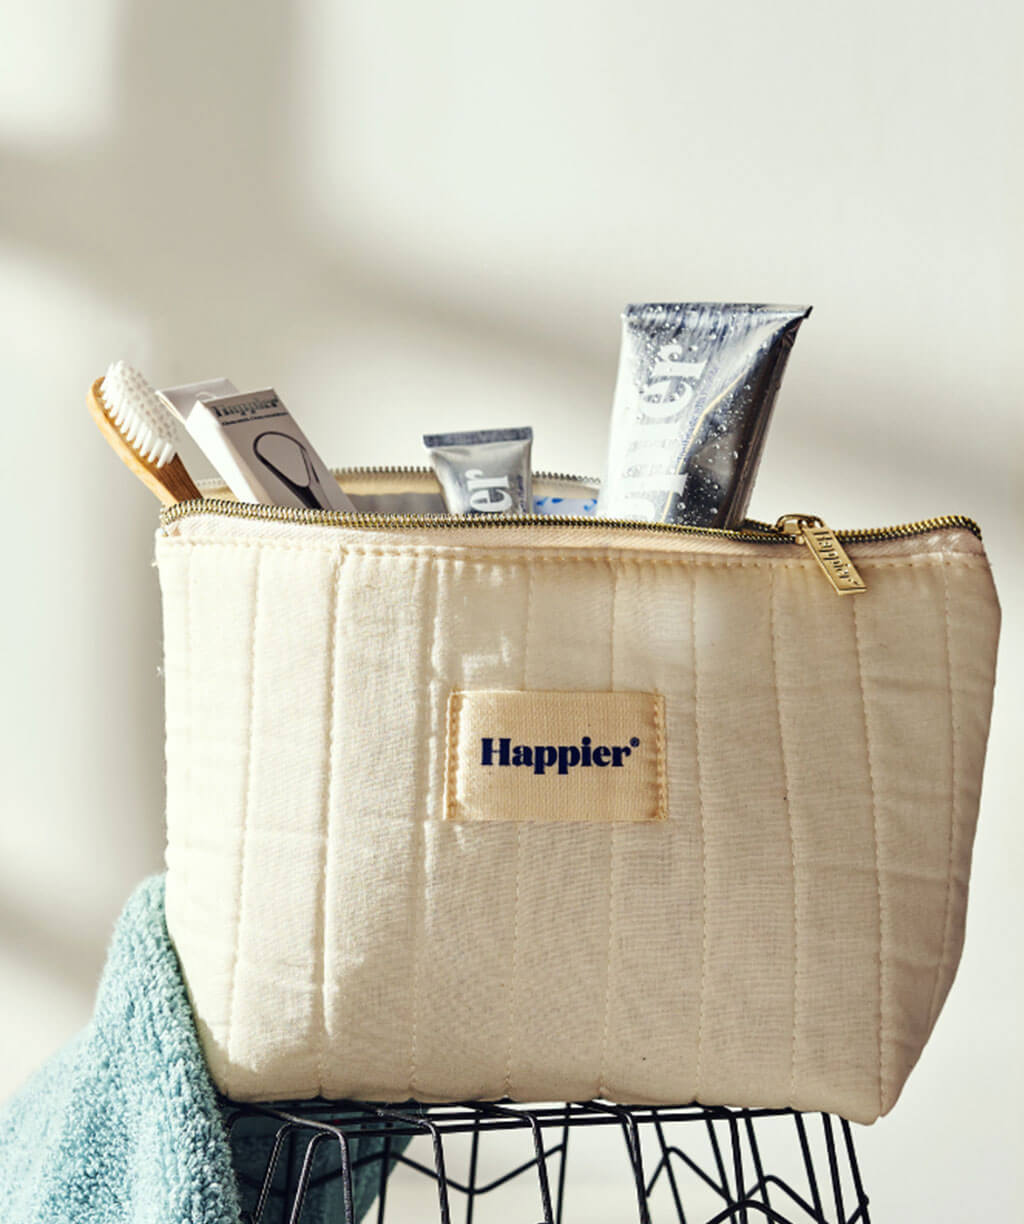 Happier Cosmetic Washbag